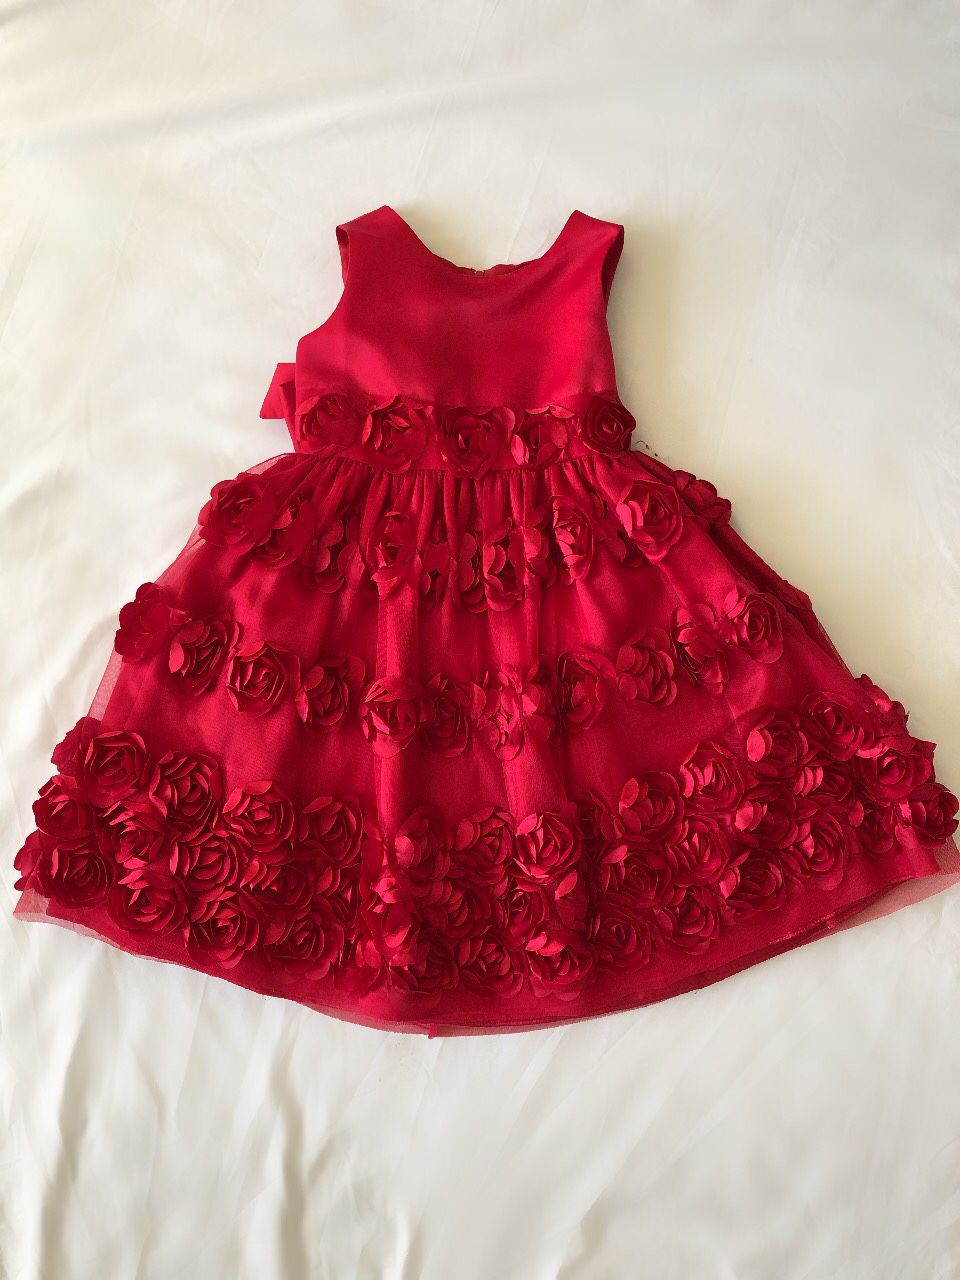 Girls Bonnie Jean size 6 Dress, Red Dress, Red Flower Dress, flower dress